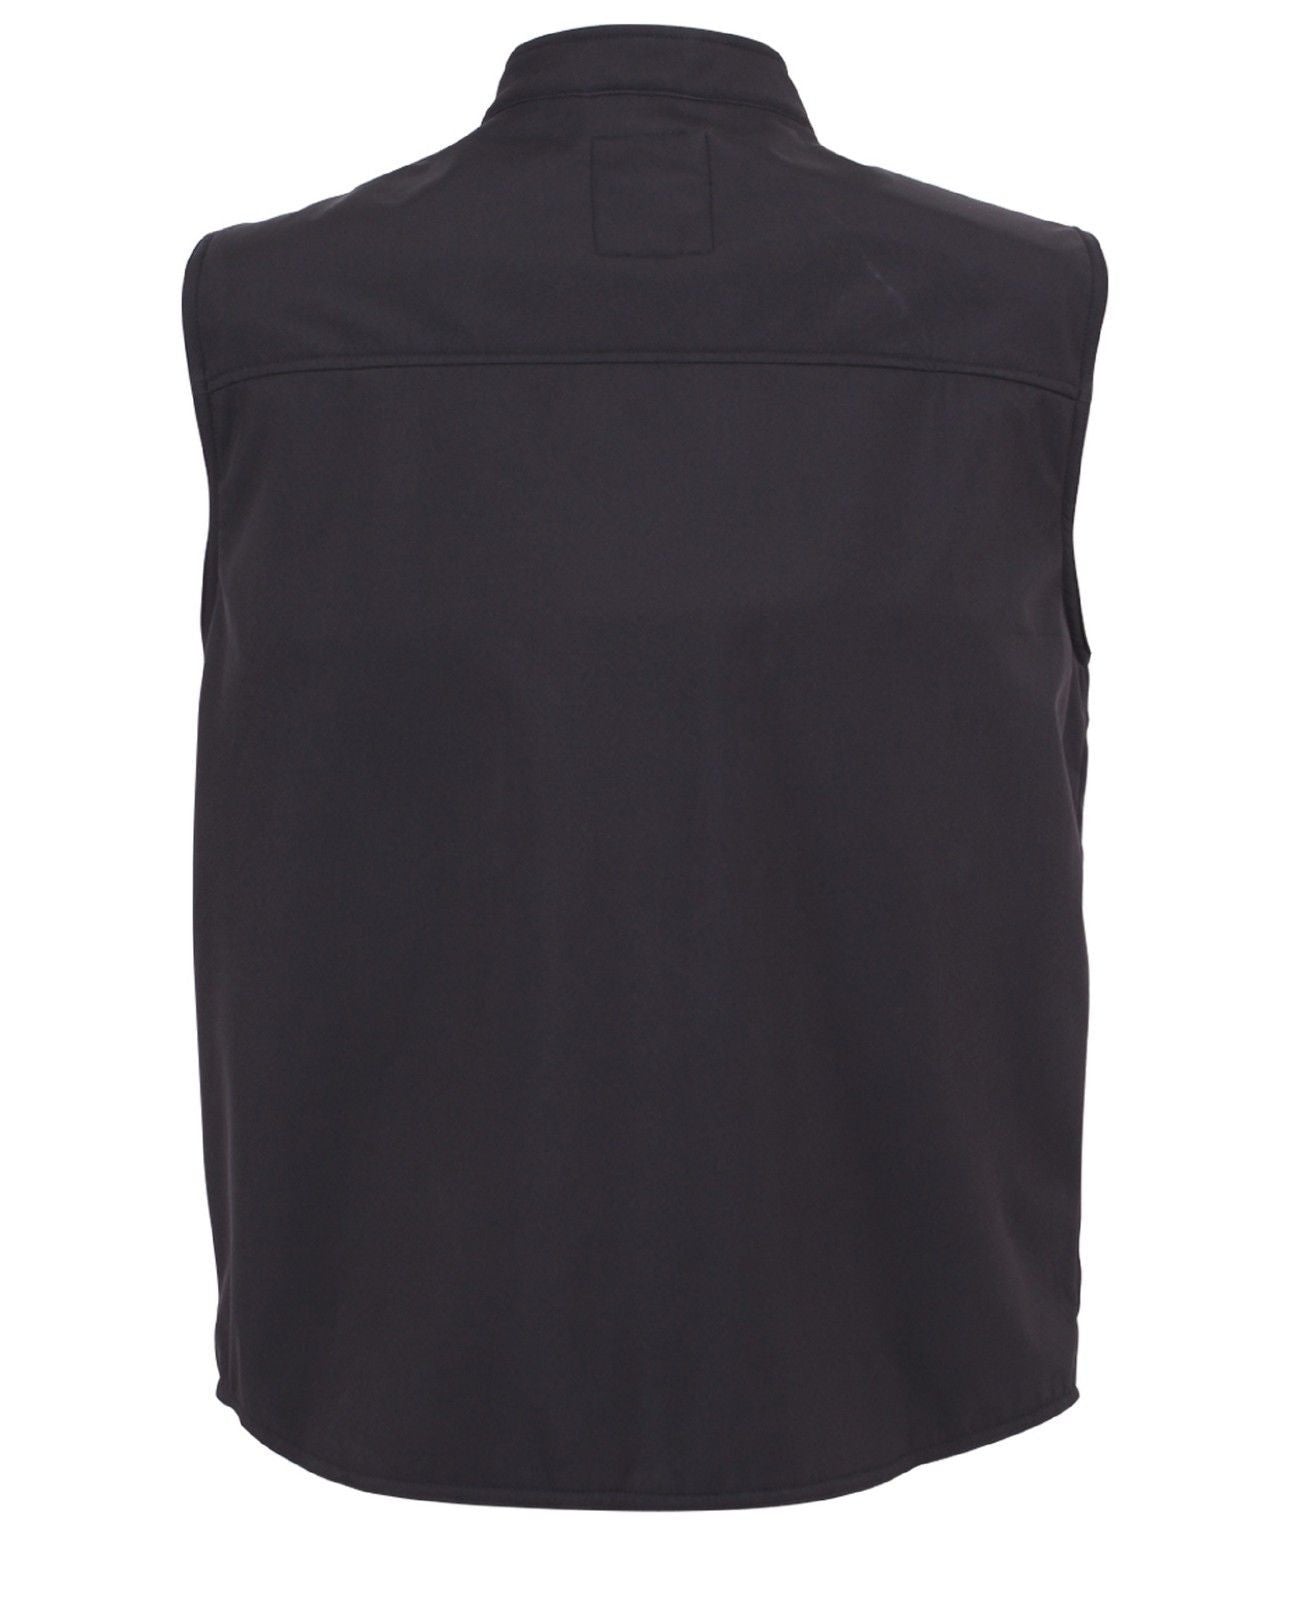 Men's Black Concealed Carry Waterproof Soft Shell Vest